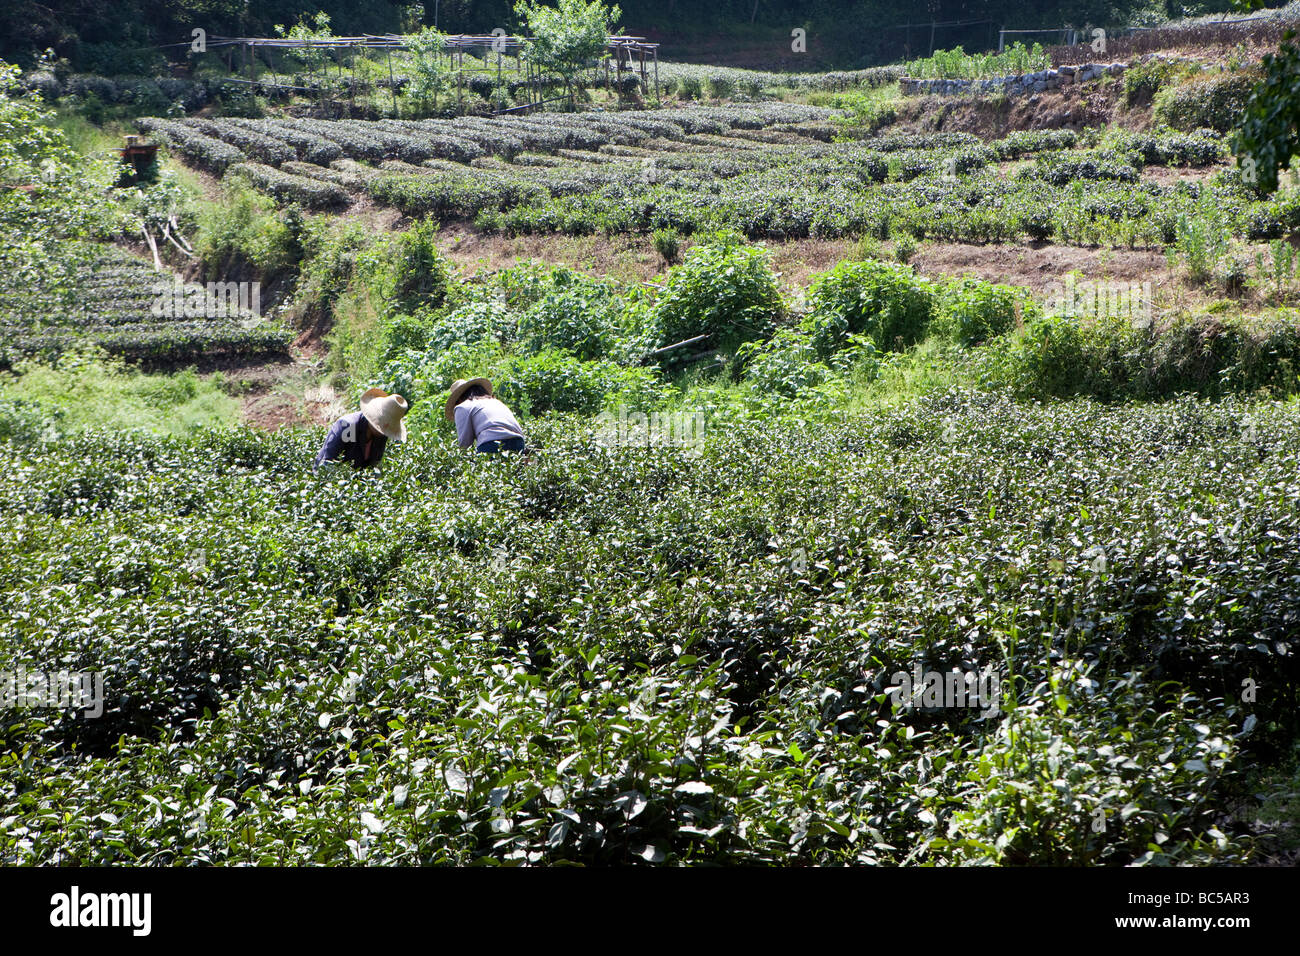 Tea fields are seen in Hangzhou, China Stock Photo